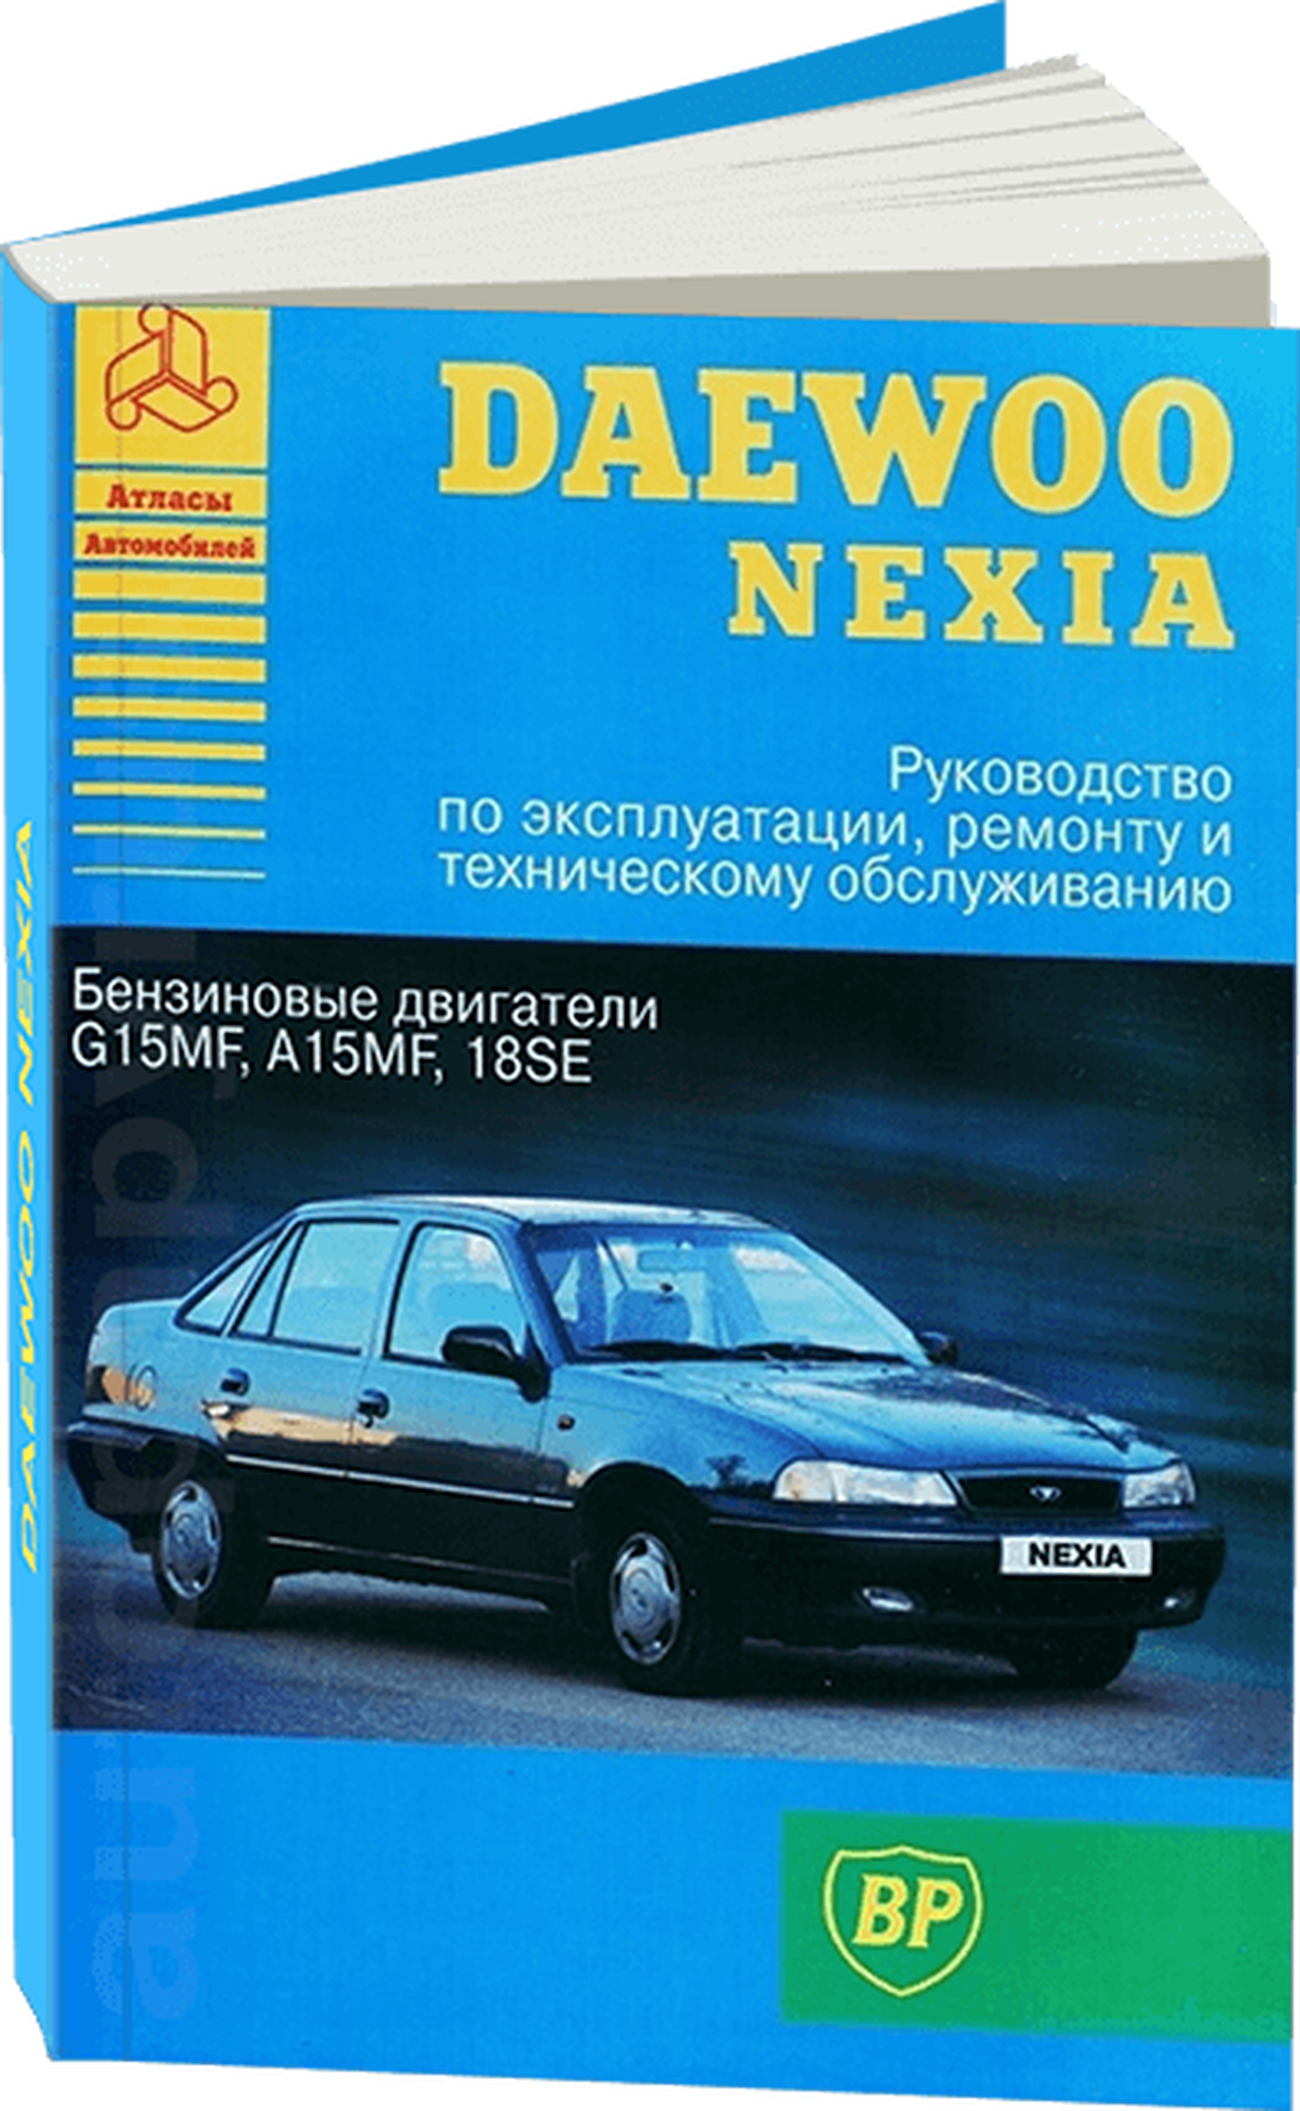 Книга: DAEWOO NEXIA (б) рем., экспл., то | Арго-Авто